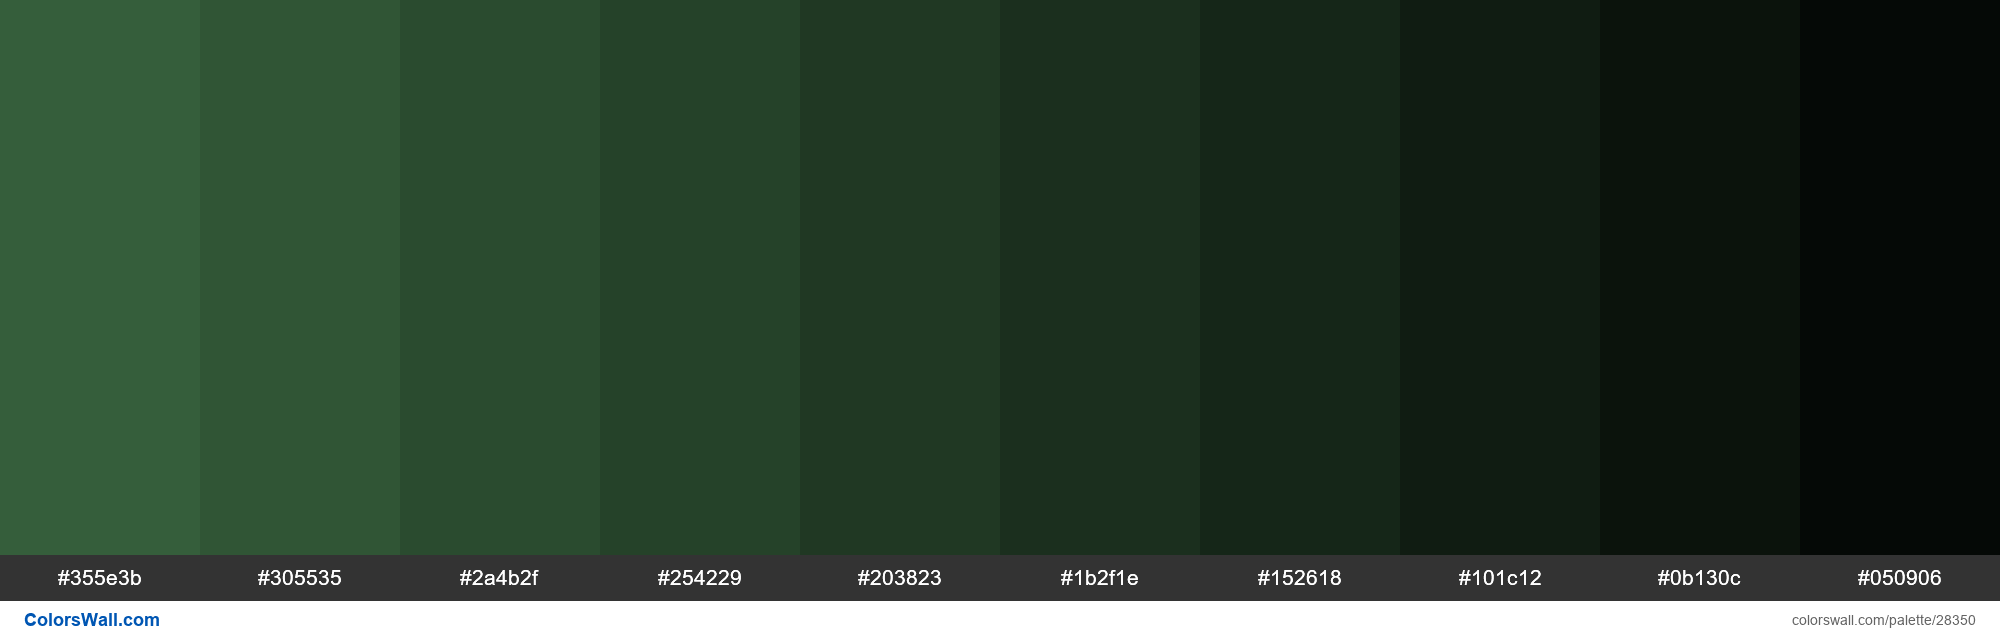 Shades of Hunter Green color #355E3B hex | ColorsWall